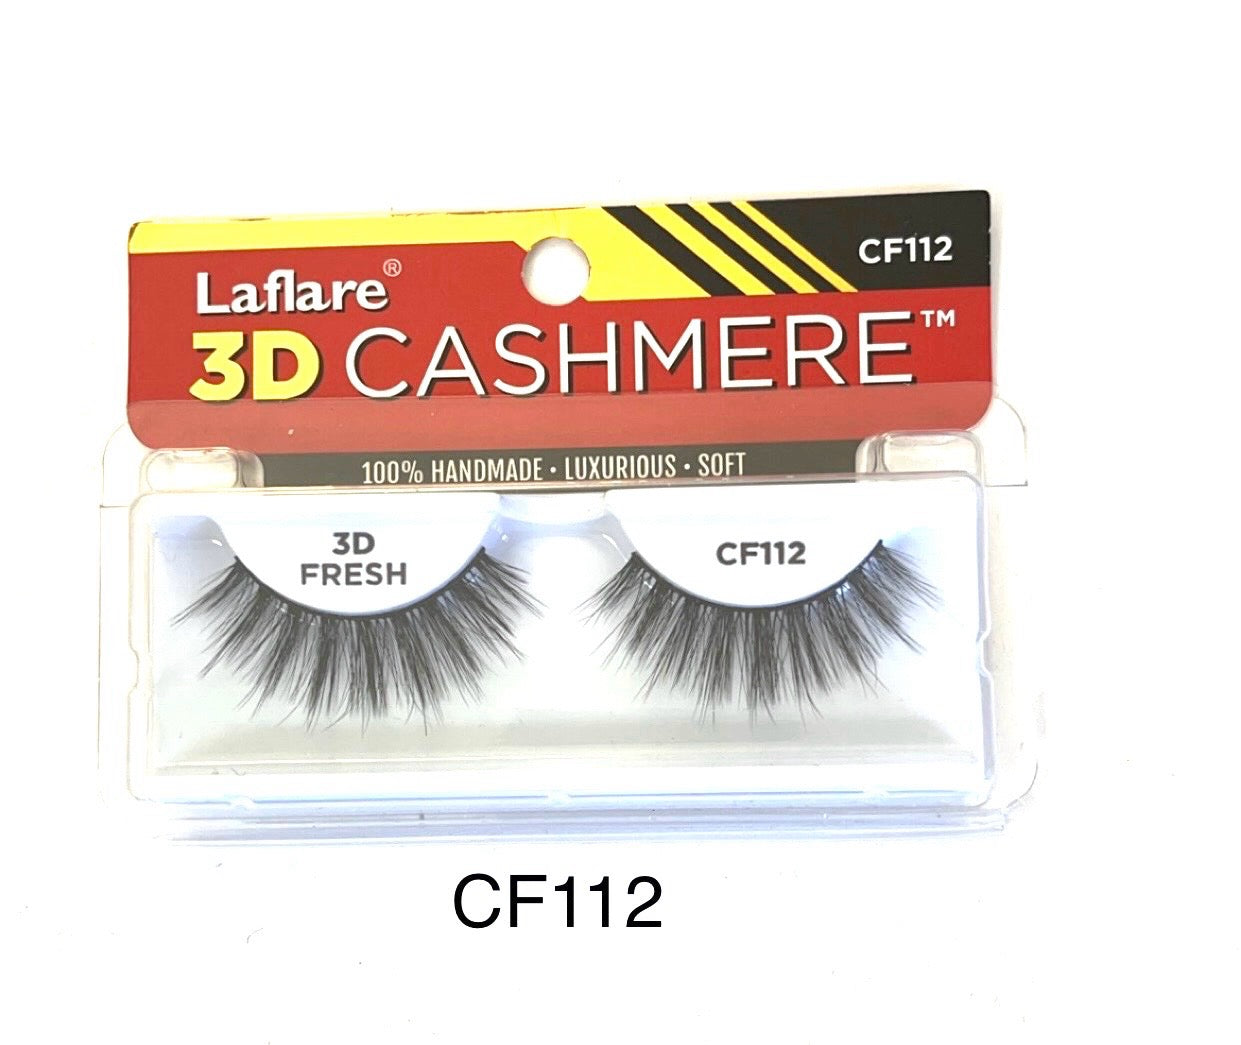 Laflare 3D Cashmere CF112